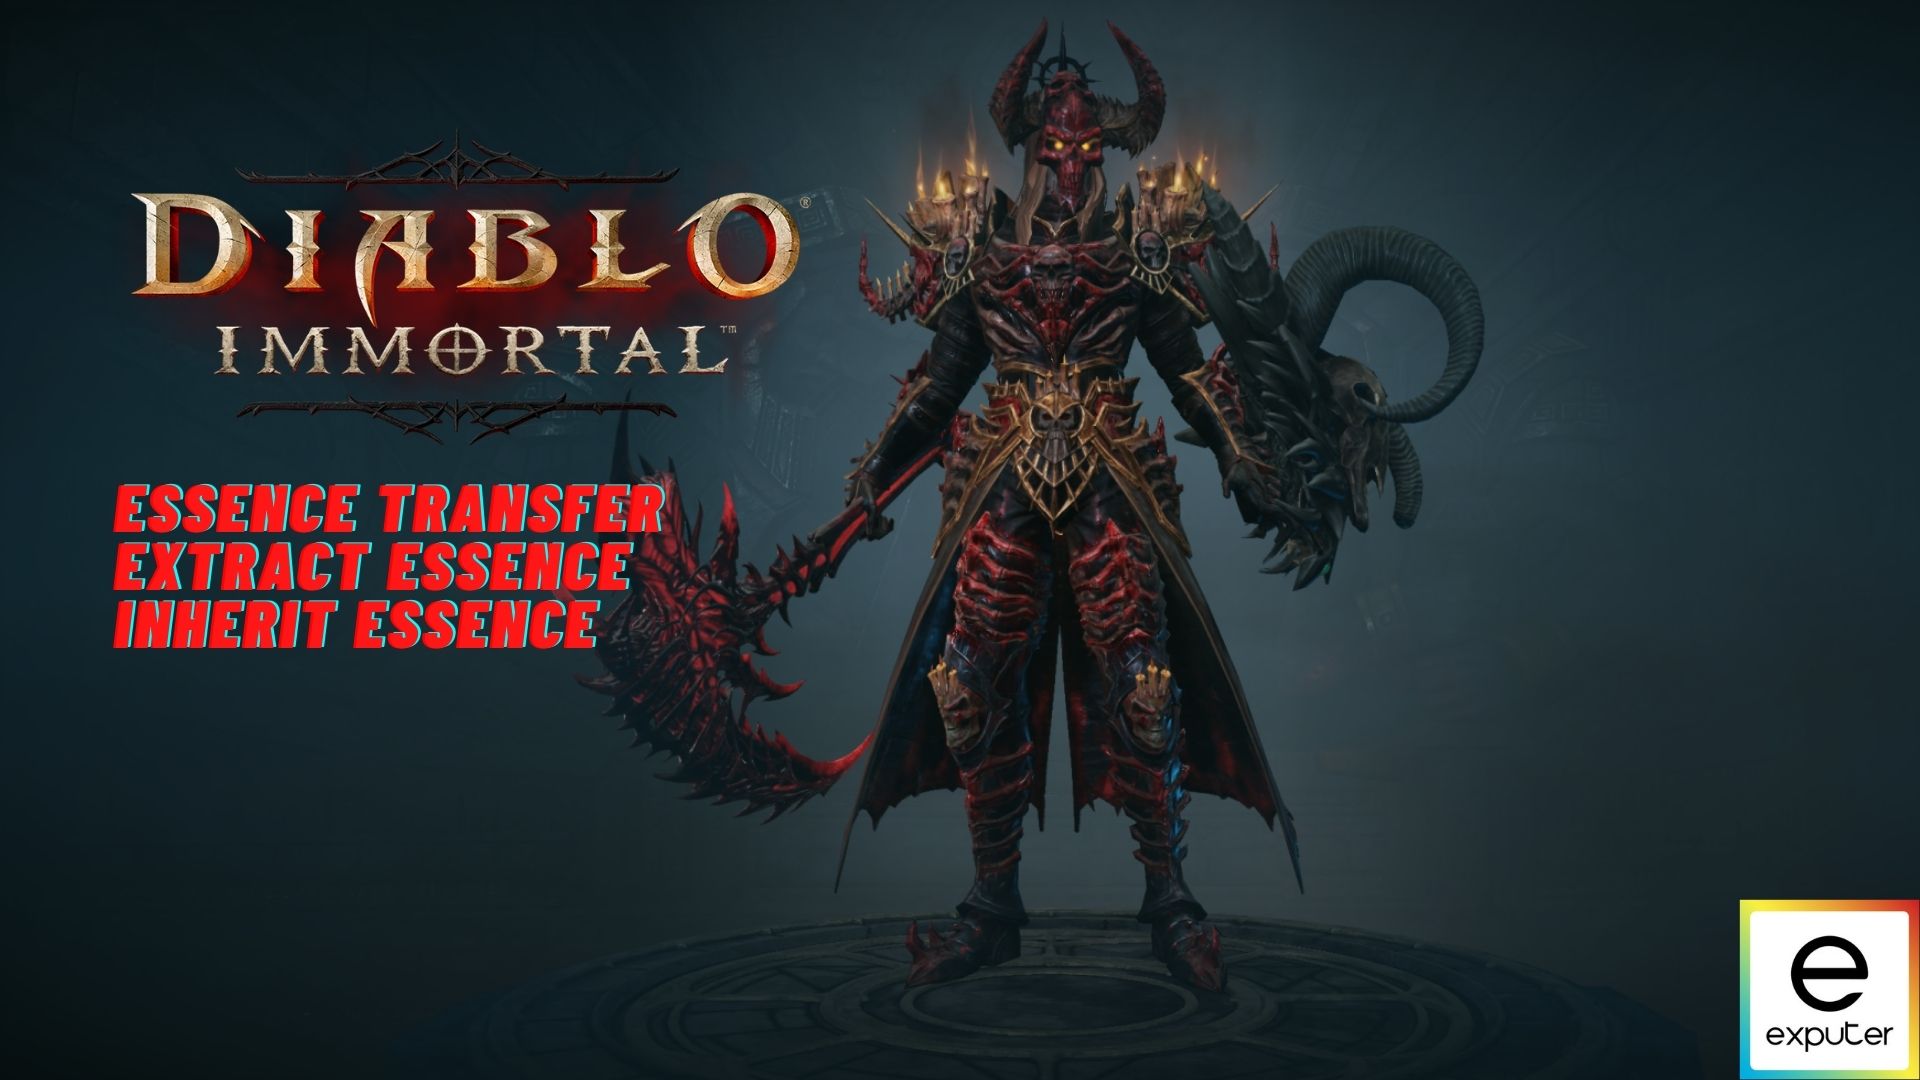 Extract Essence in Diablo Immortal